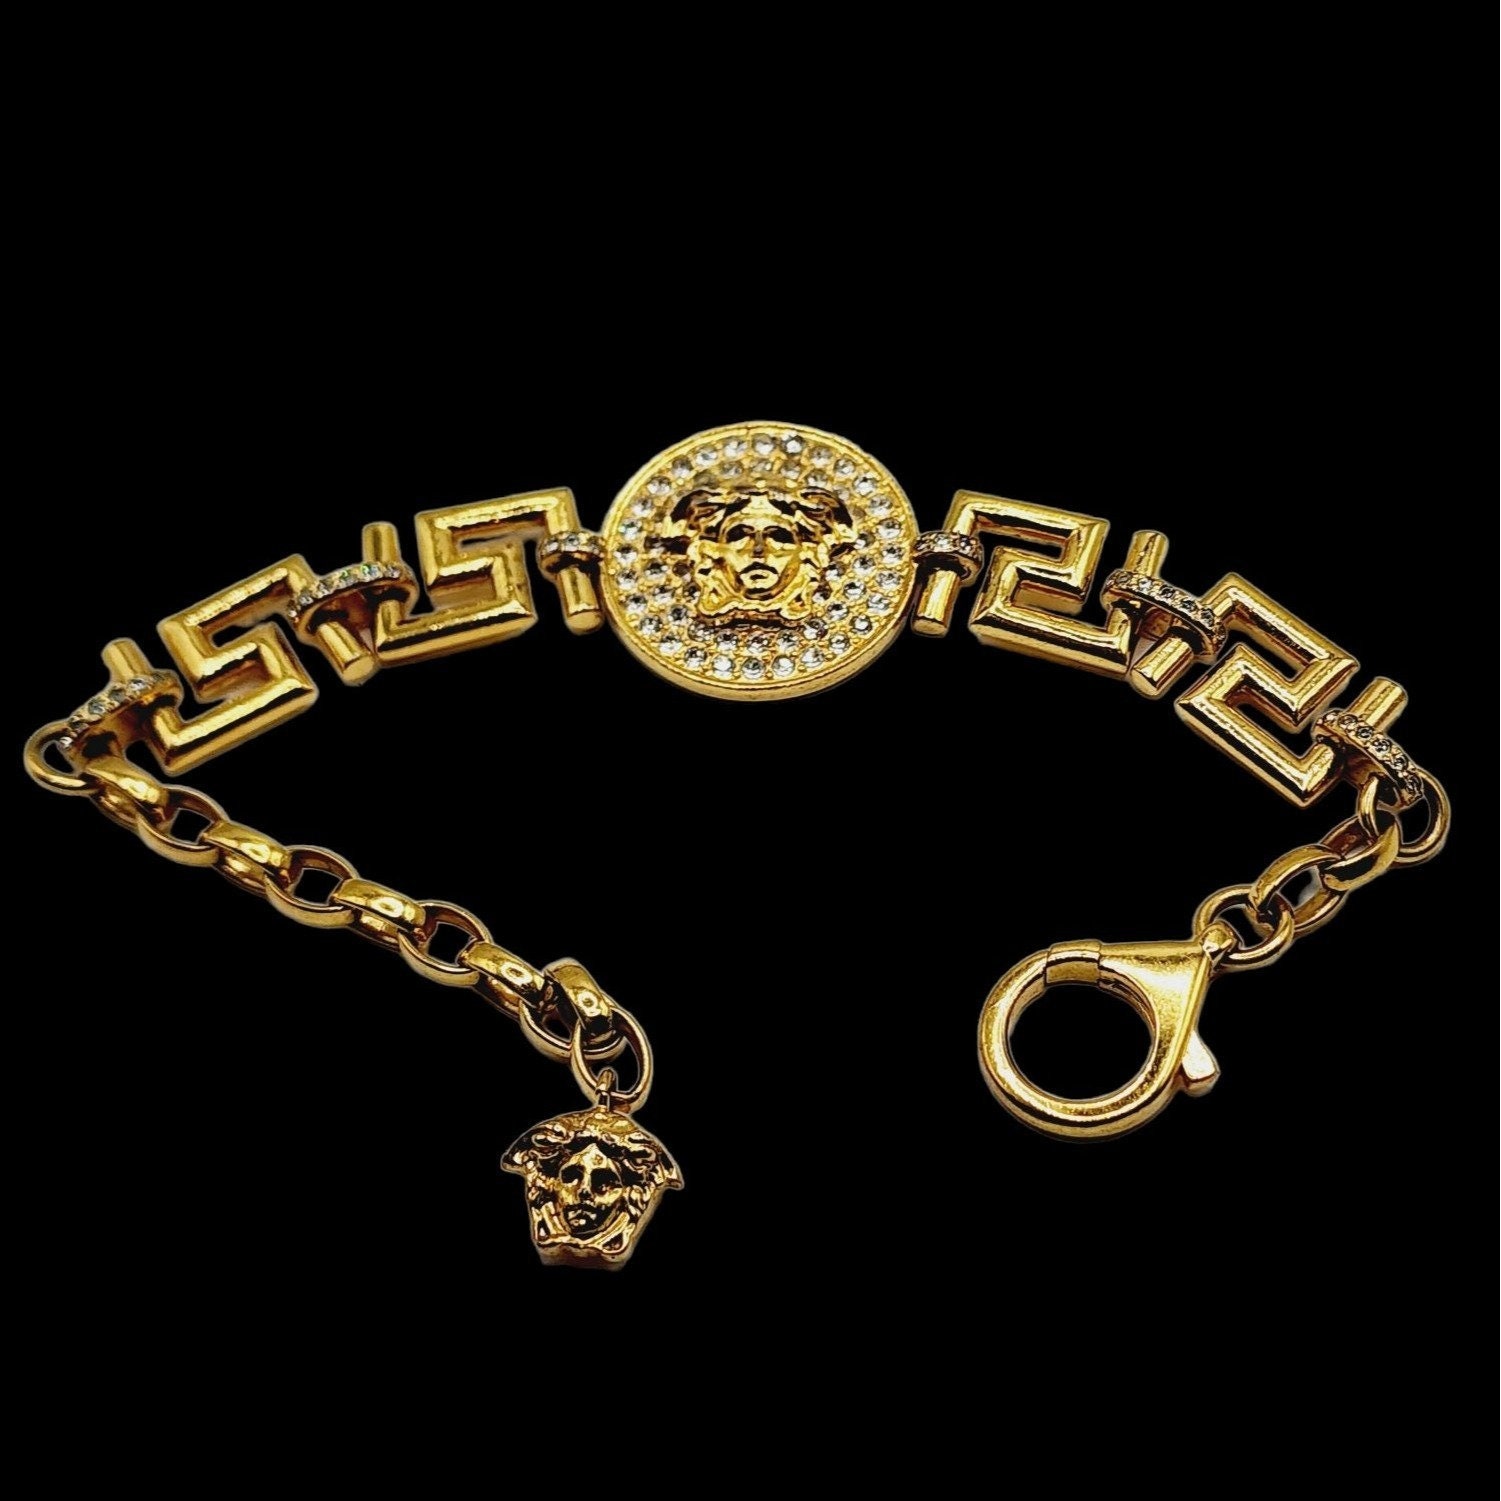 VERSACE GIANNI VERSACE Bracelet Bangle AUTH MEDUSA Vintage 17.5cm 2 Medal  Gold | eBay